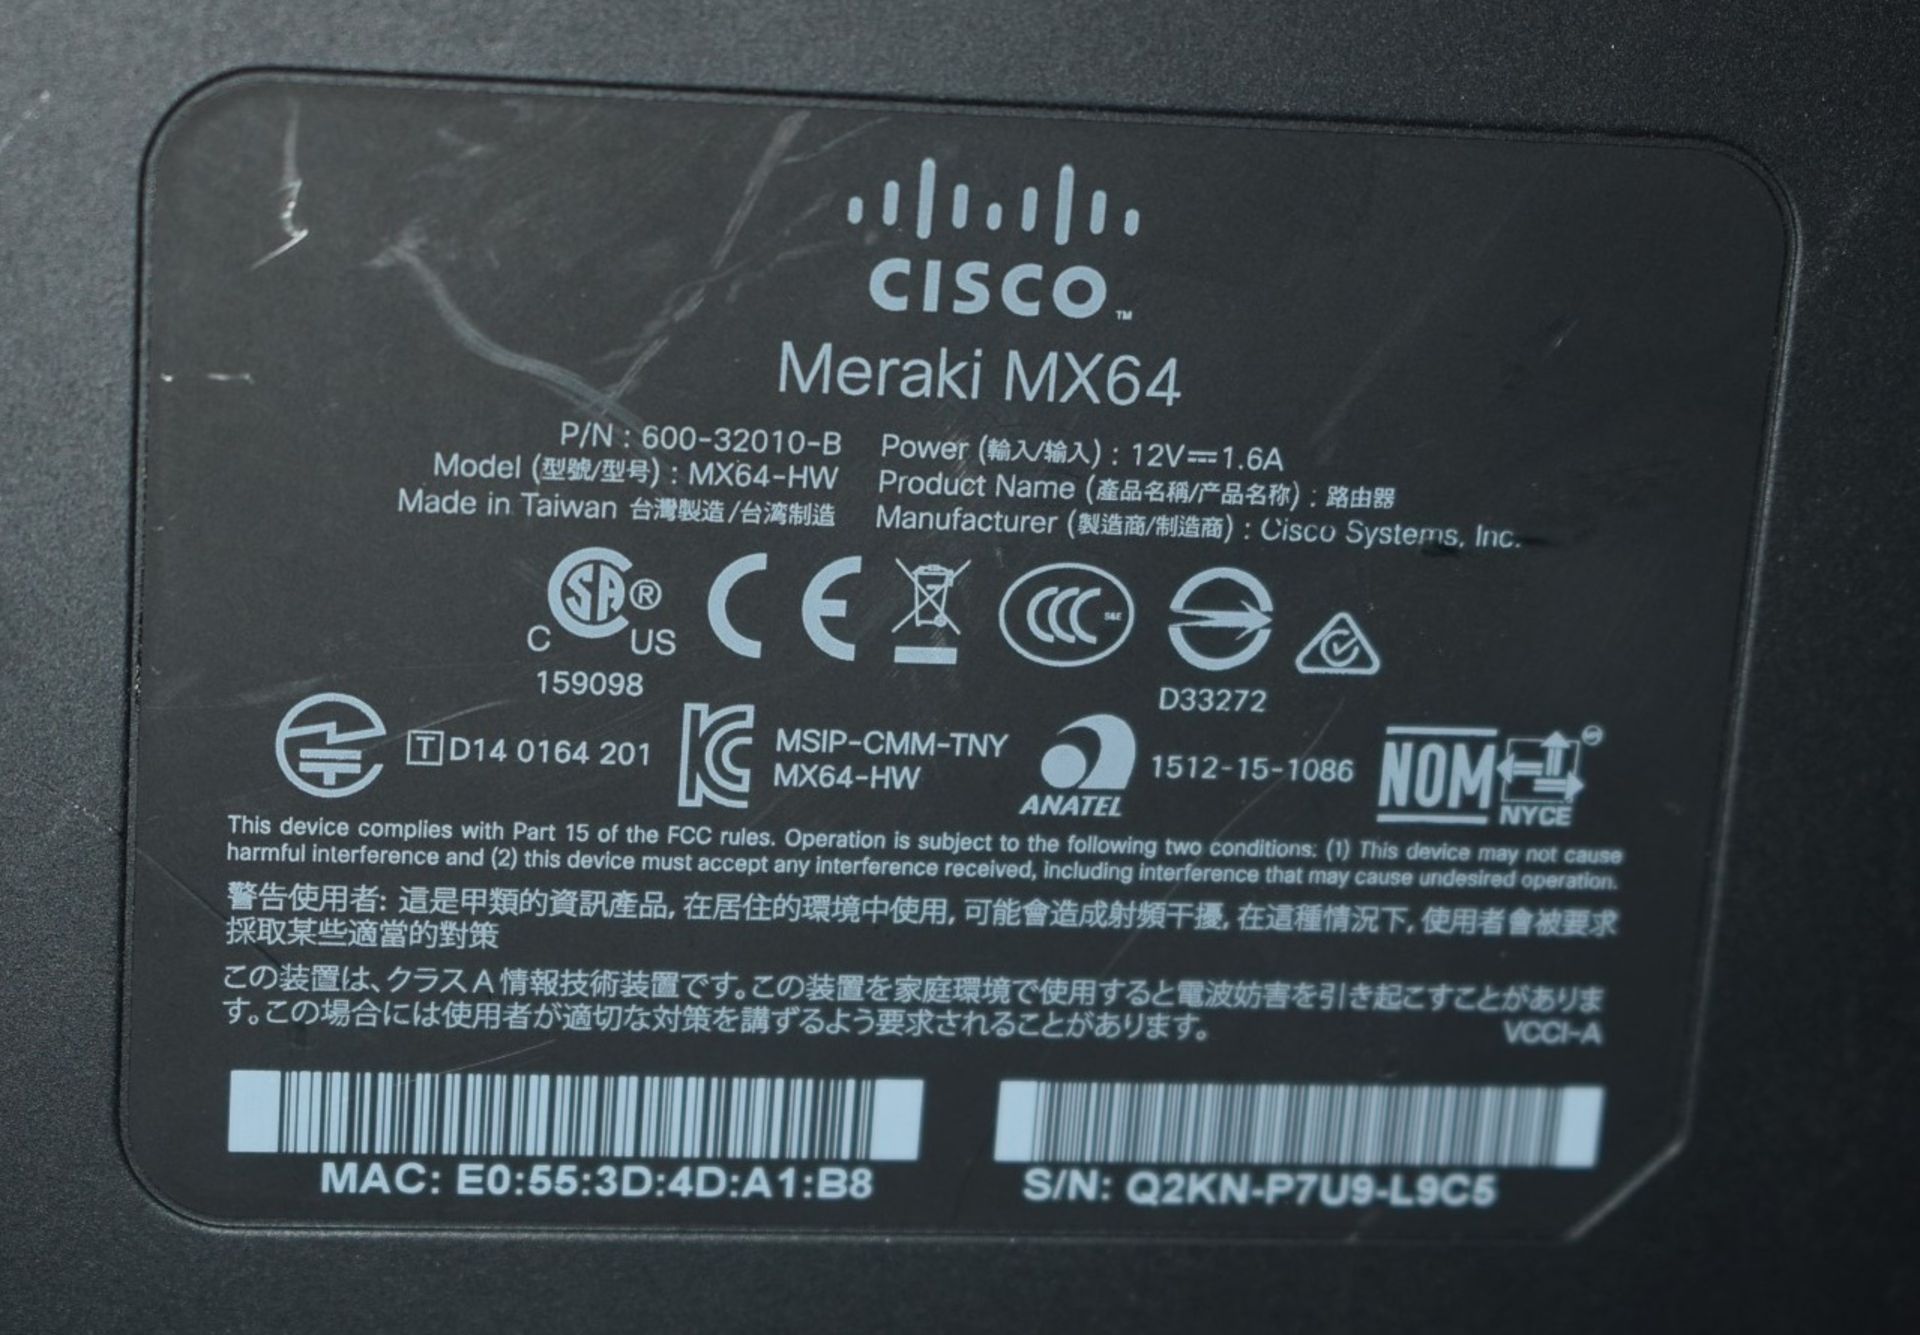 1 x Cisco Meraki MX64 Cloud Managed Security Firewall Appliance - RRP £425 - Ref: MPC563 CG - - Image 4 of 6